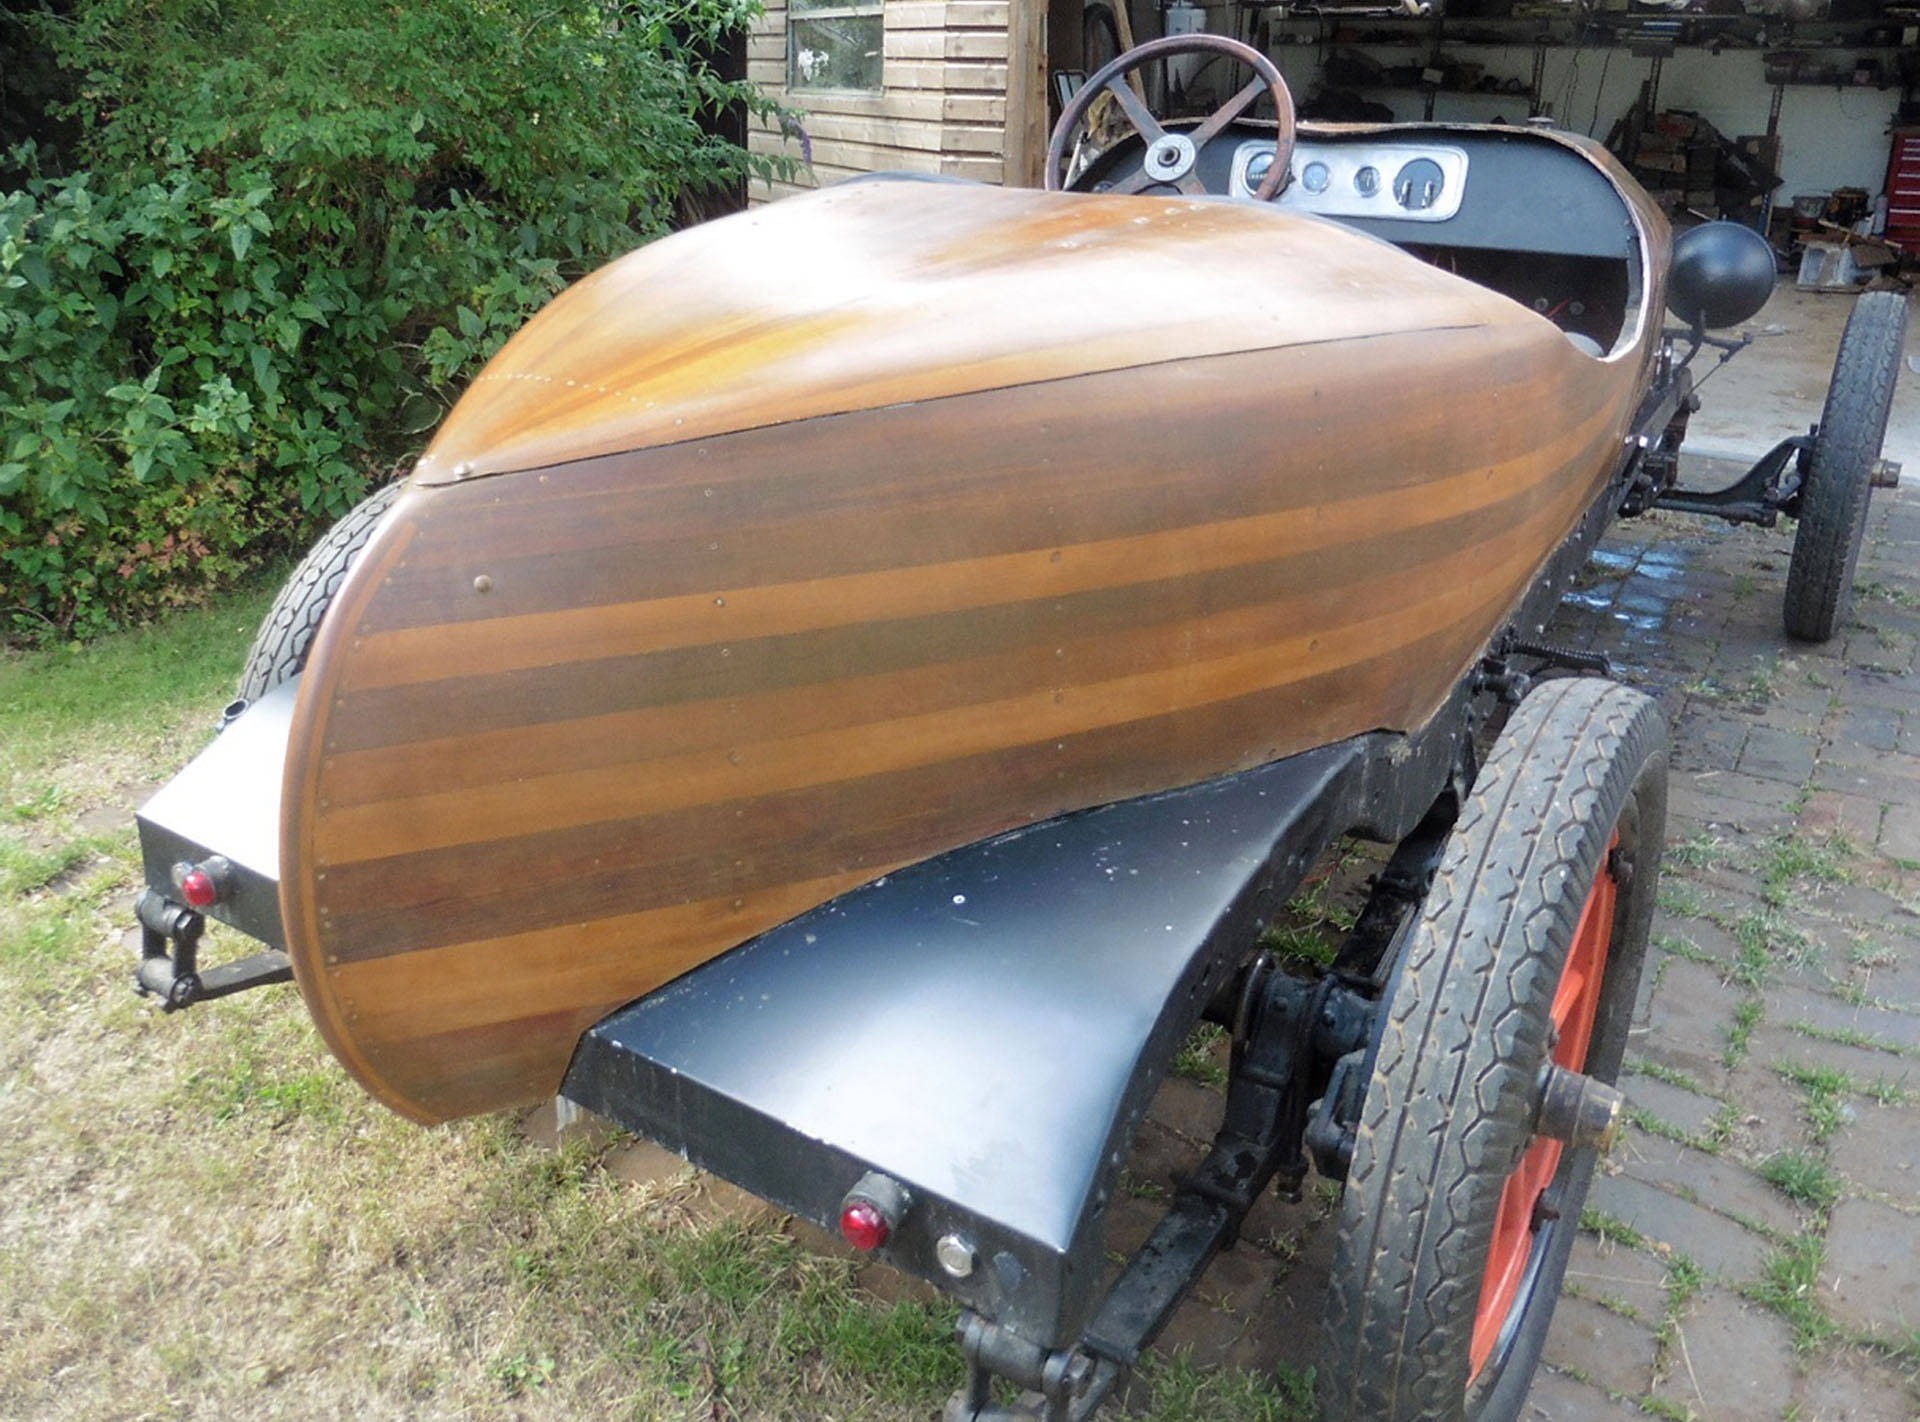 Car with cedar strip body